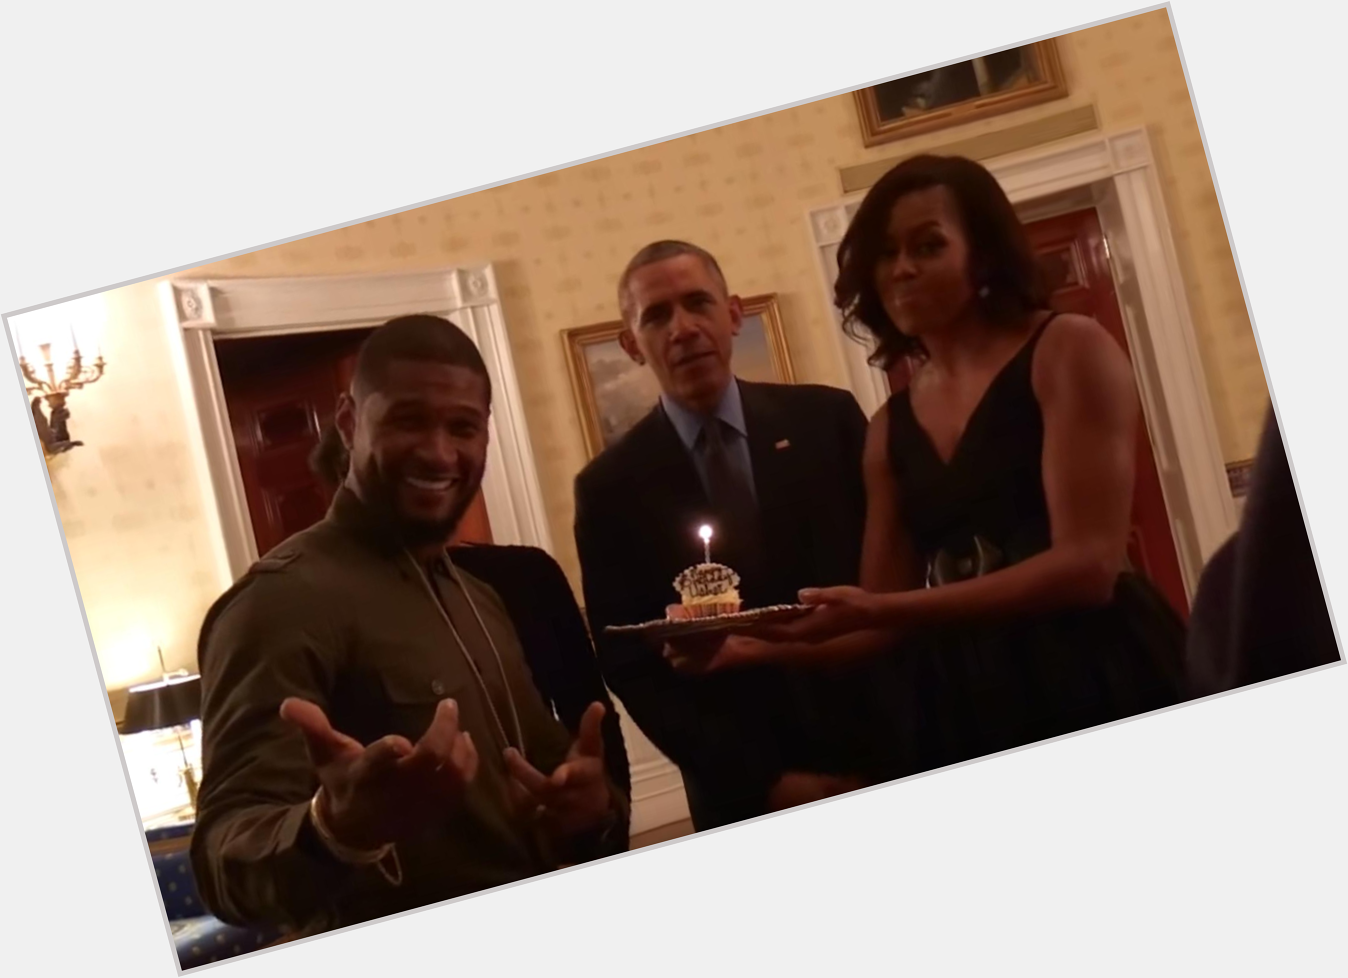 The Obamas singing happy birthday to is just so joyful:  